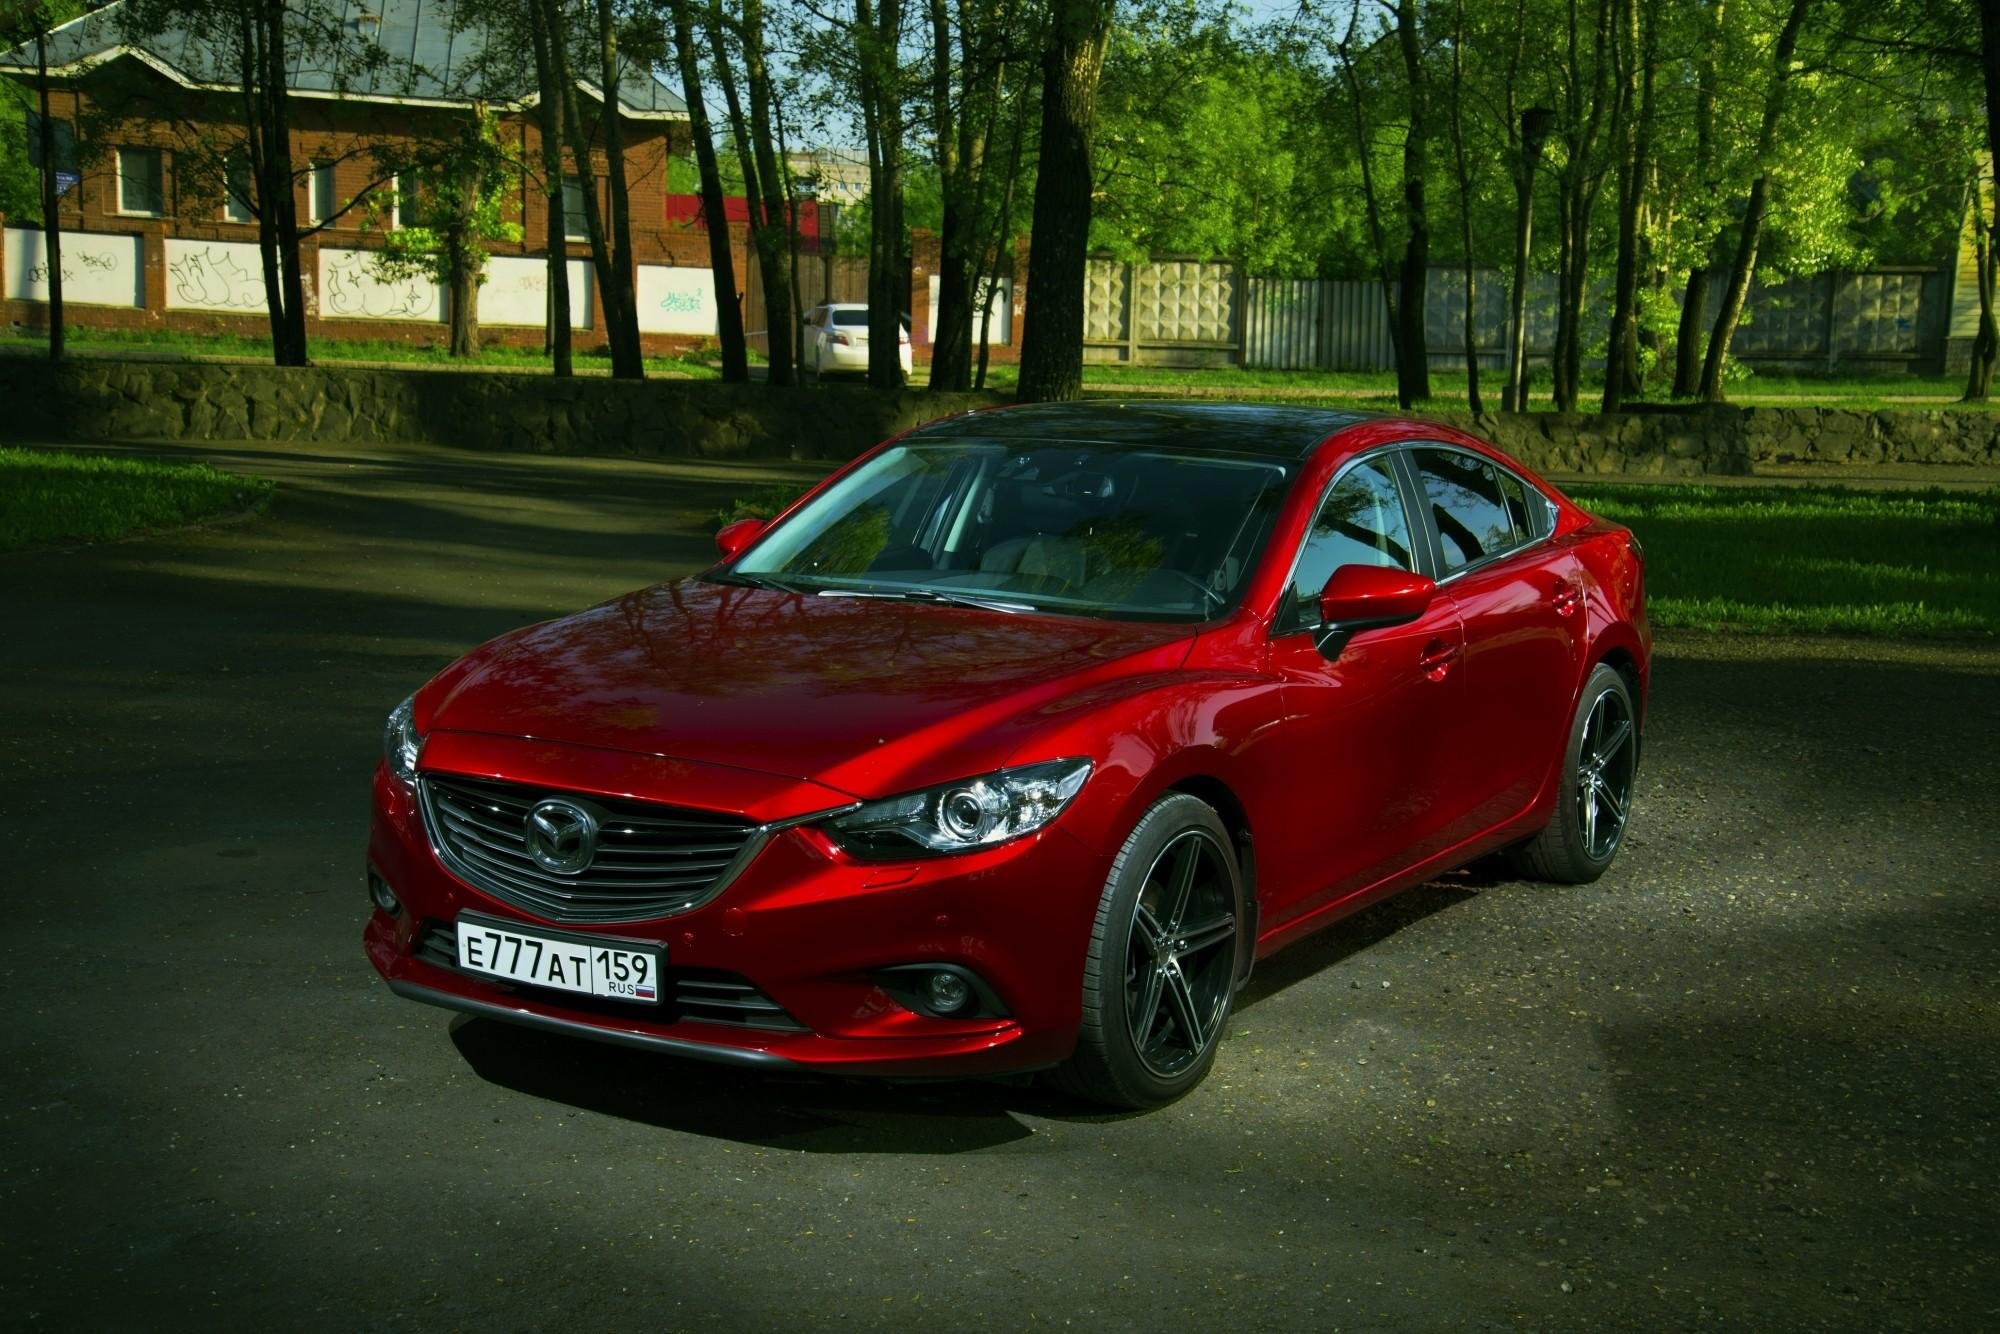 Red mazda. Mazda 6 Red. Мазда 6 2015 года красная. Мазда 6 красная новый кузов. Мазда 6 красная седан.